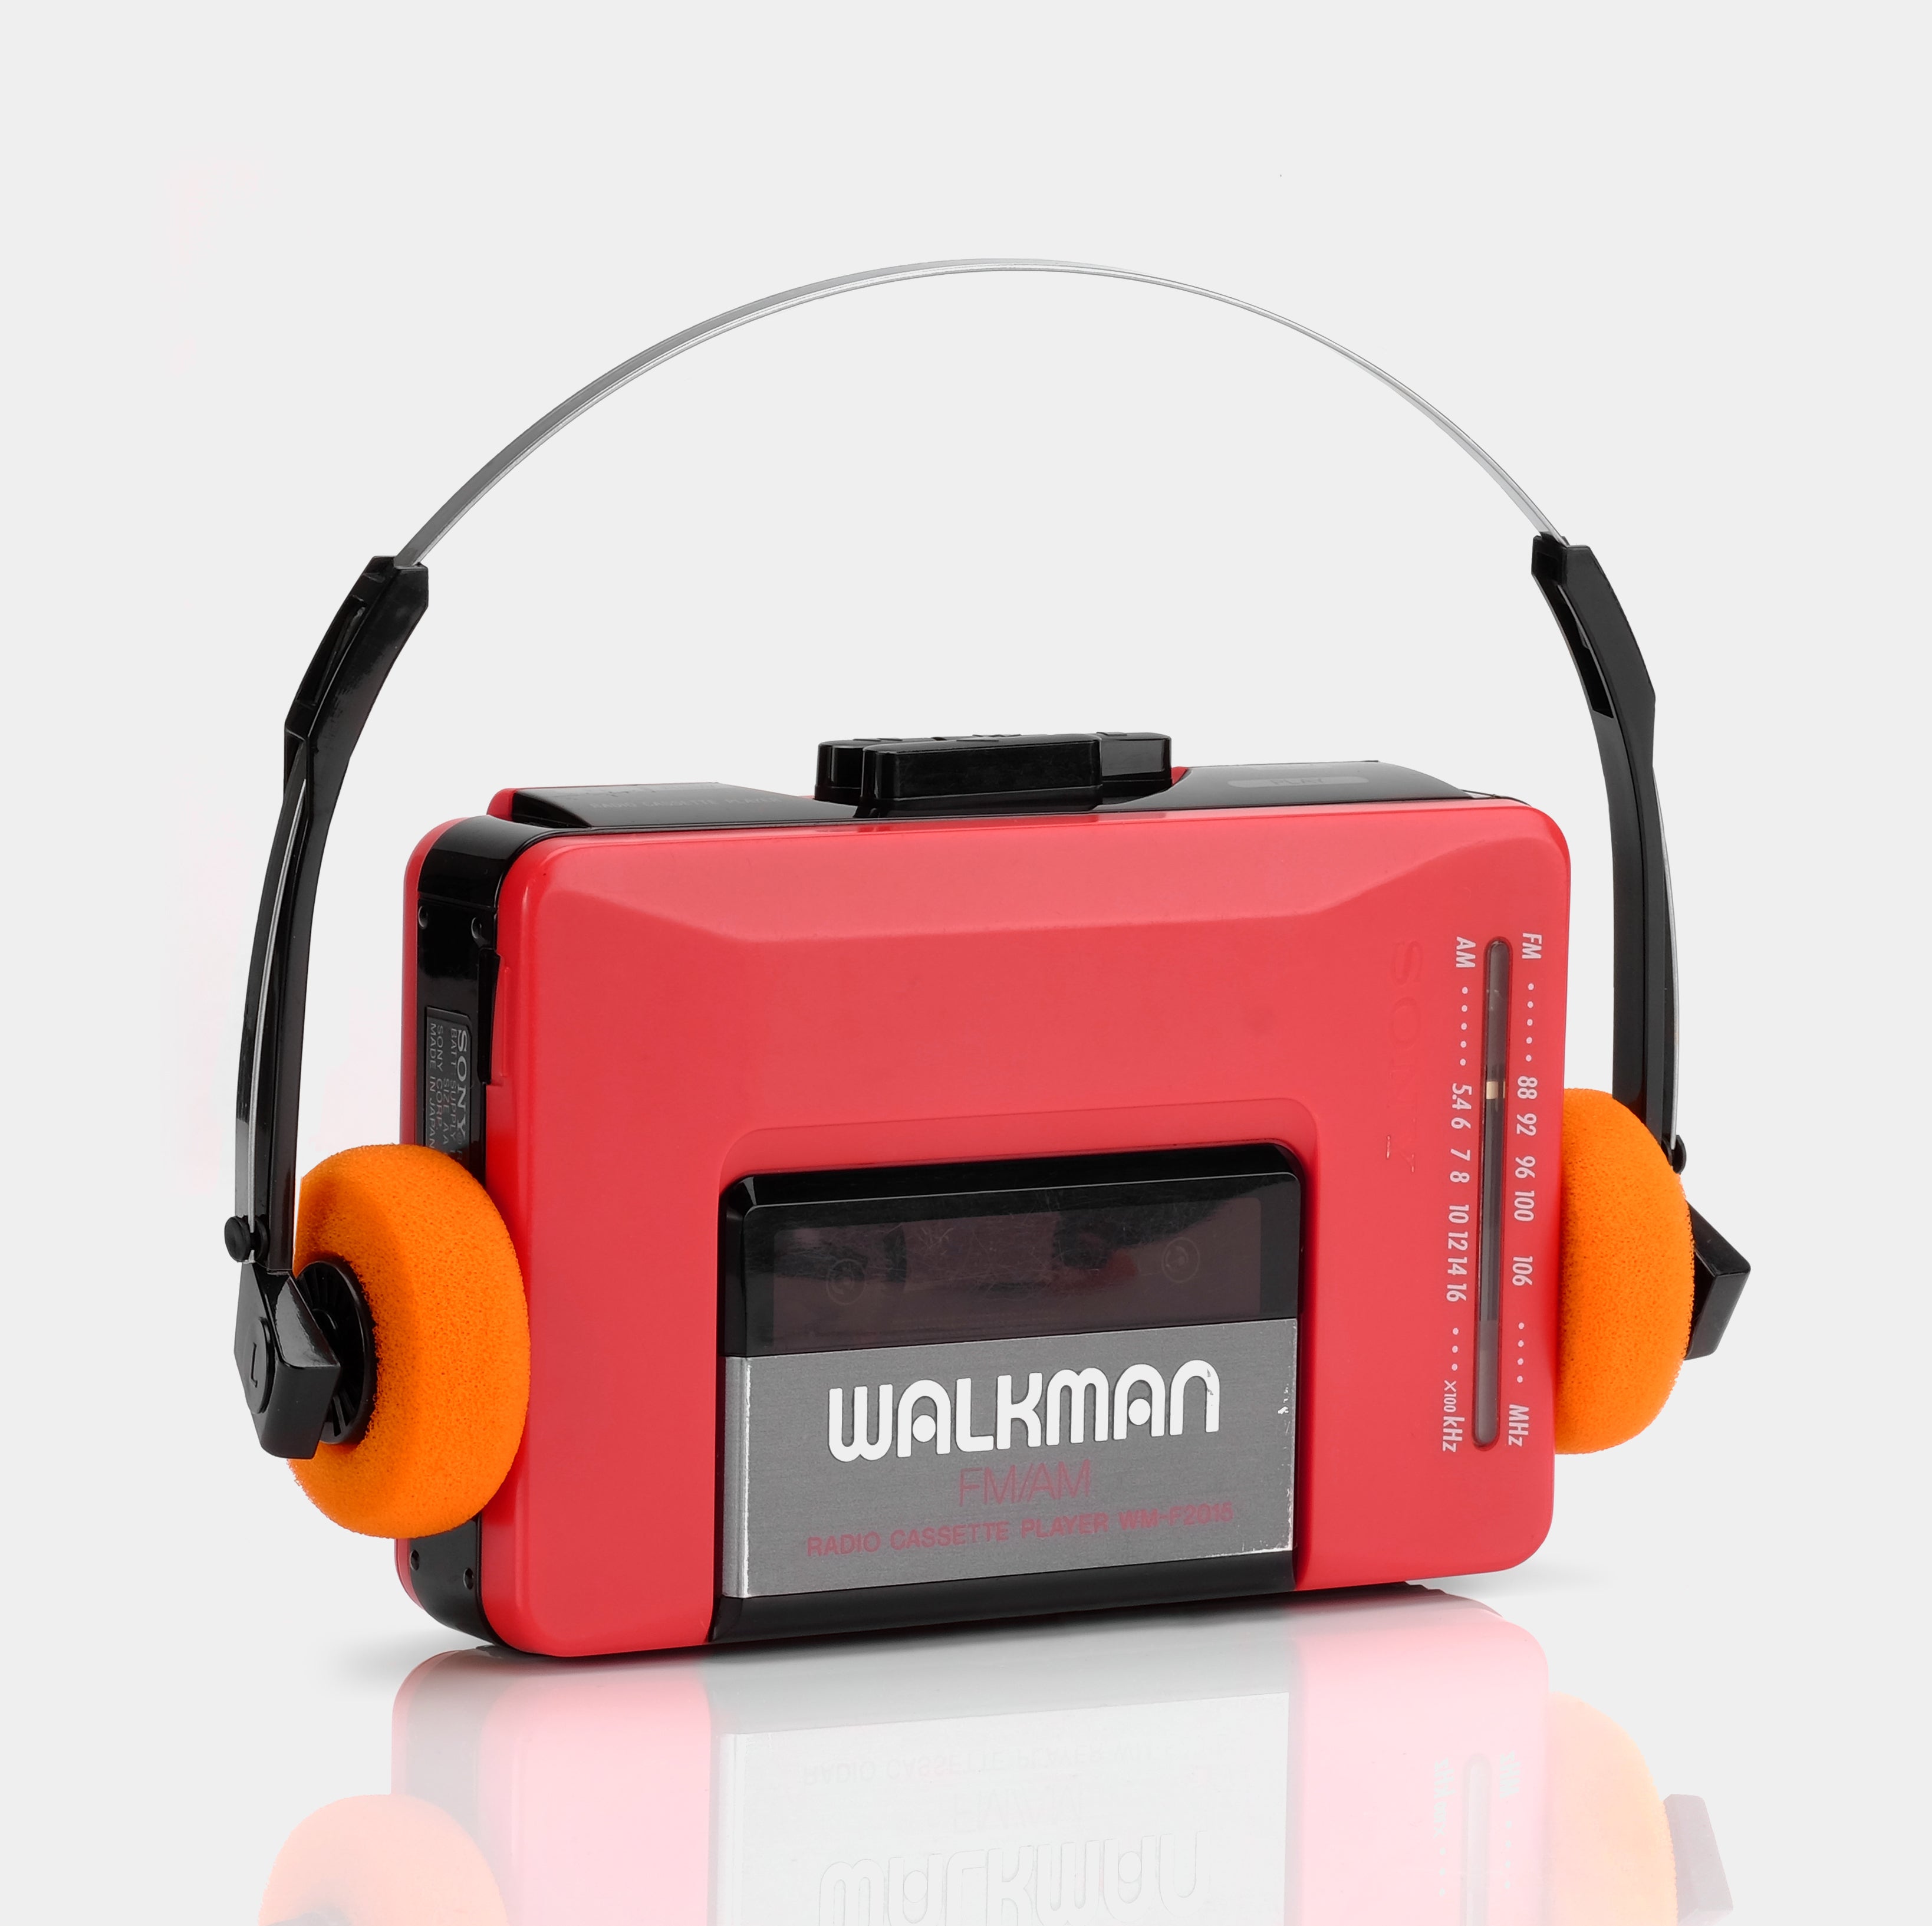 Sony Walkman WM-F2015 Red Portable Cassette Player